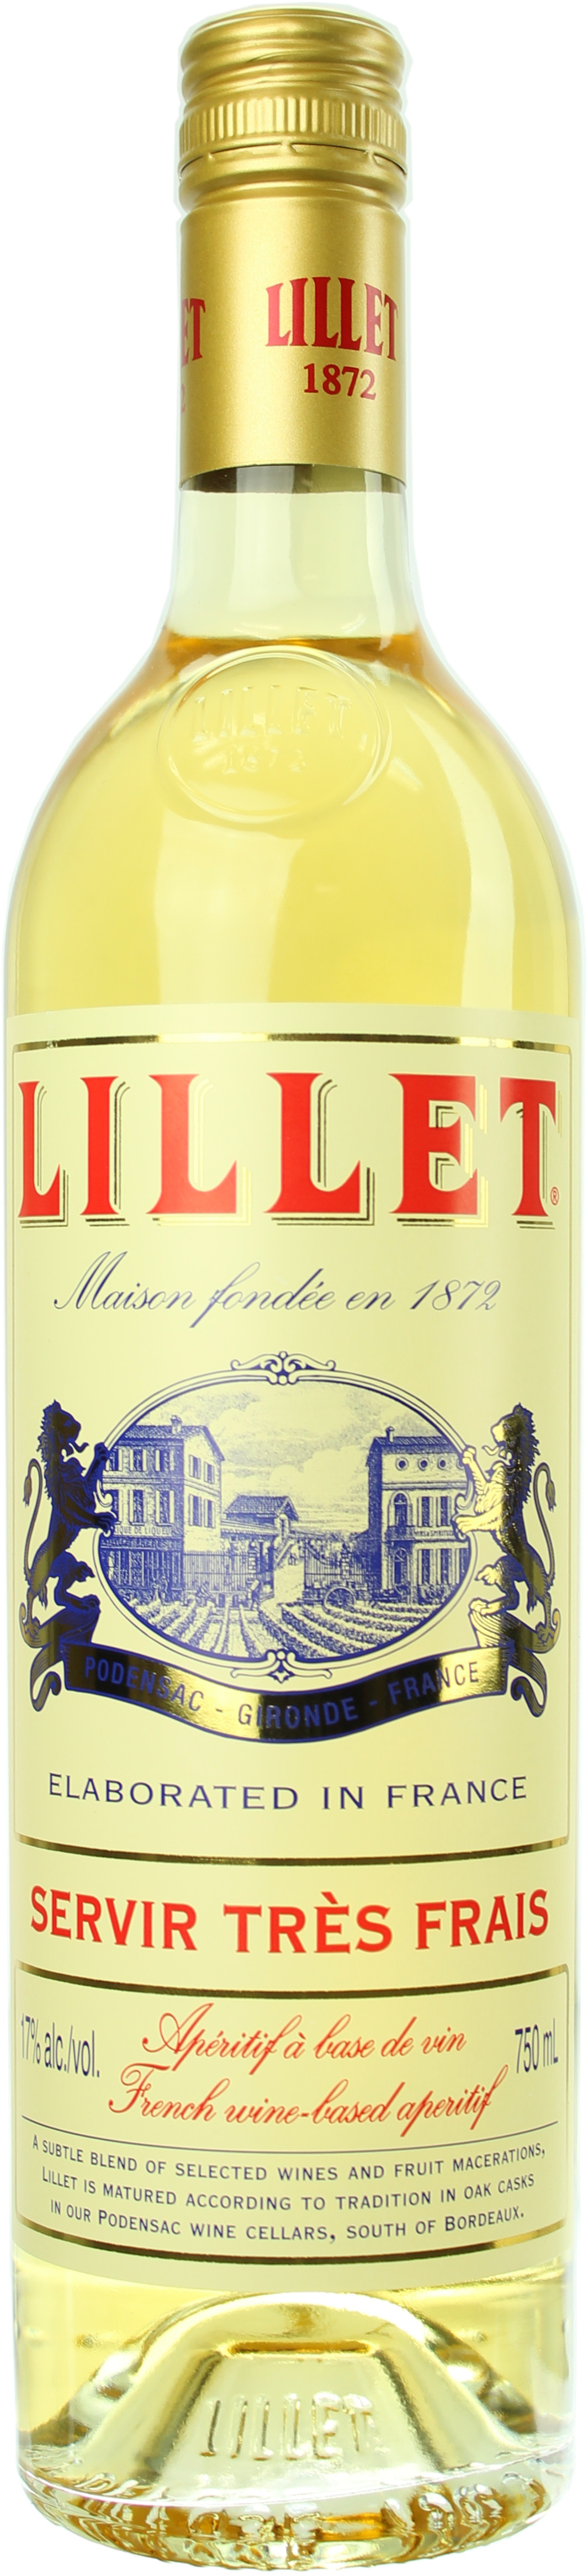 Lillet Blanc Aperitif a base de vin 17.0% 0,75l